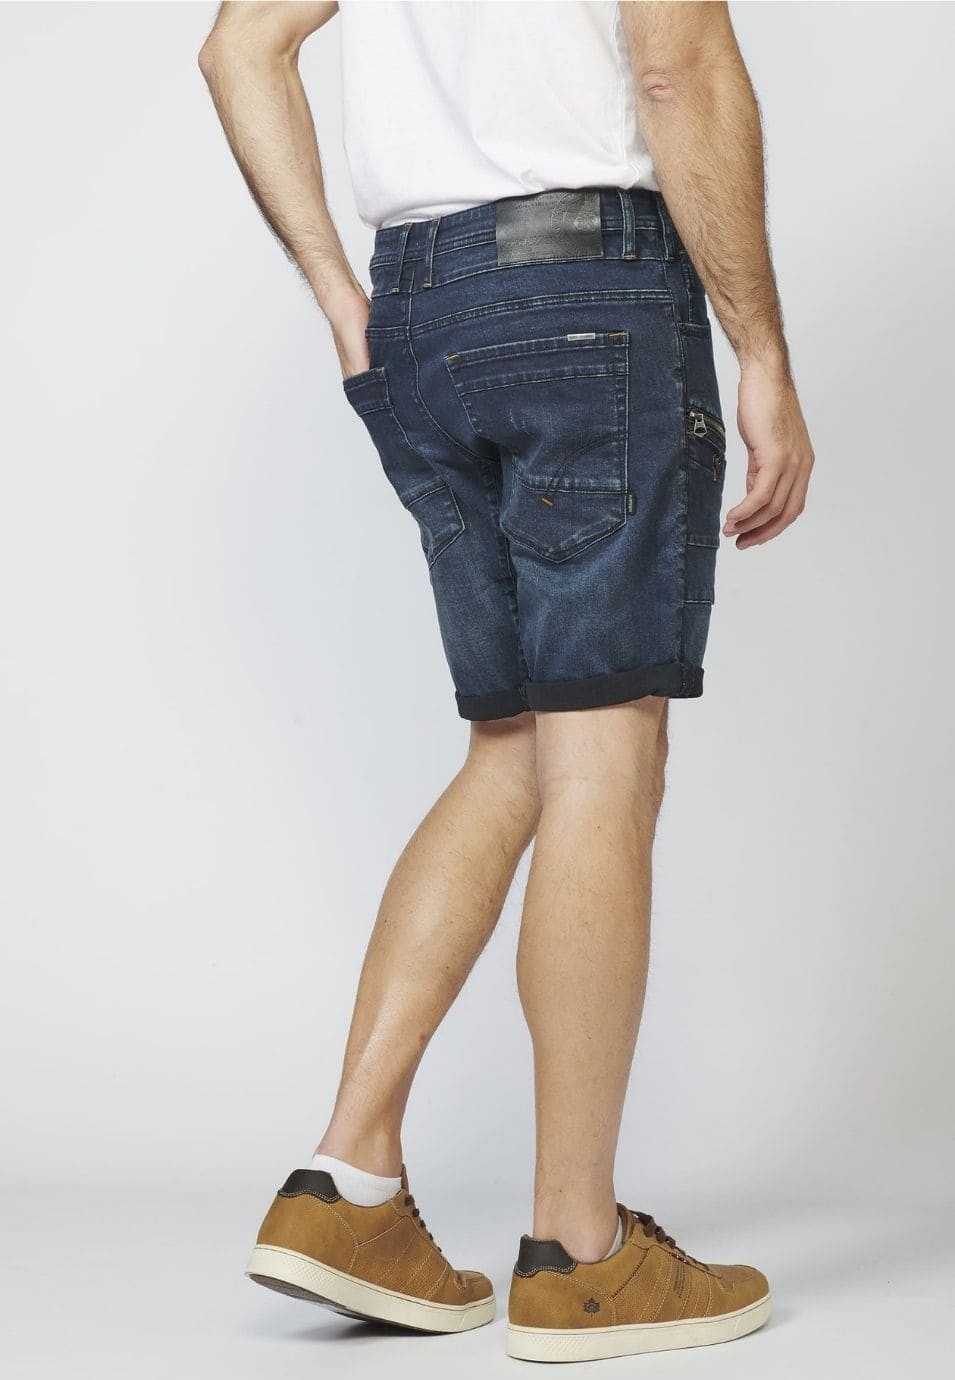 Pantalon corto denim cortes regular fit 1